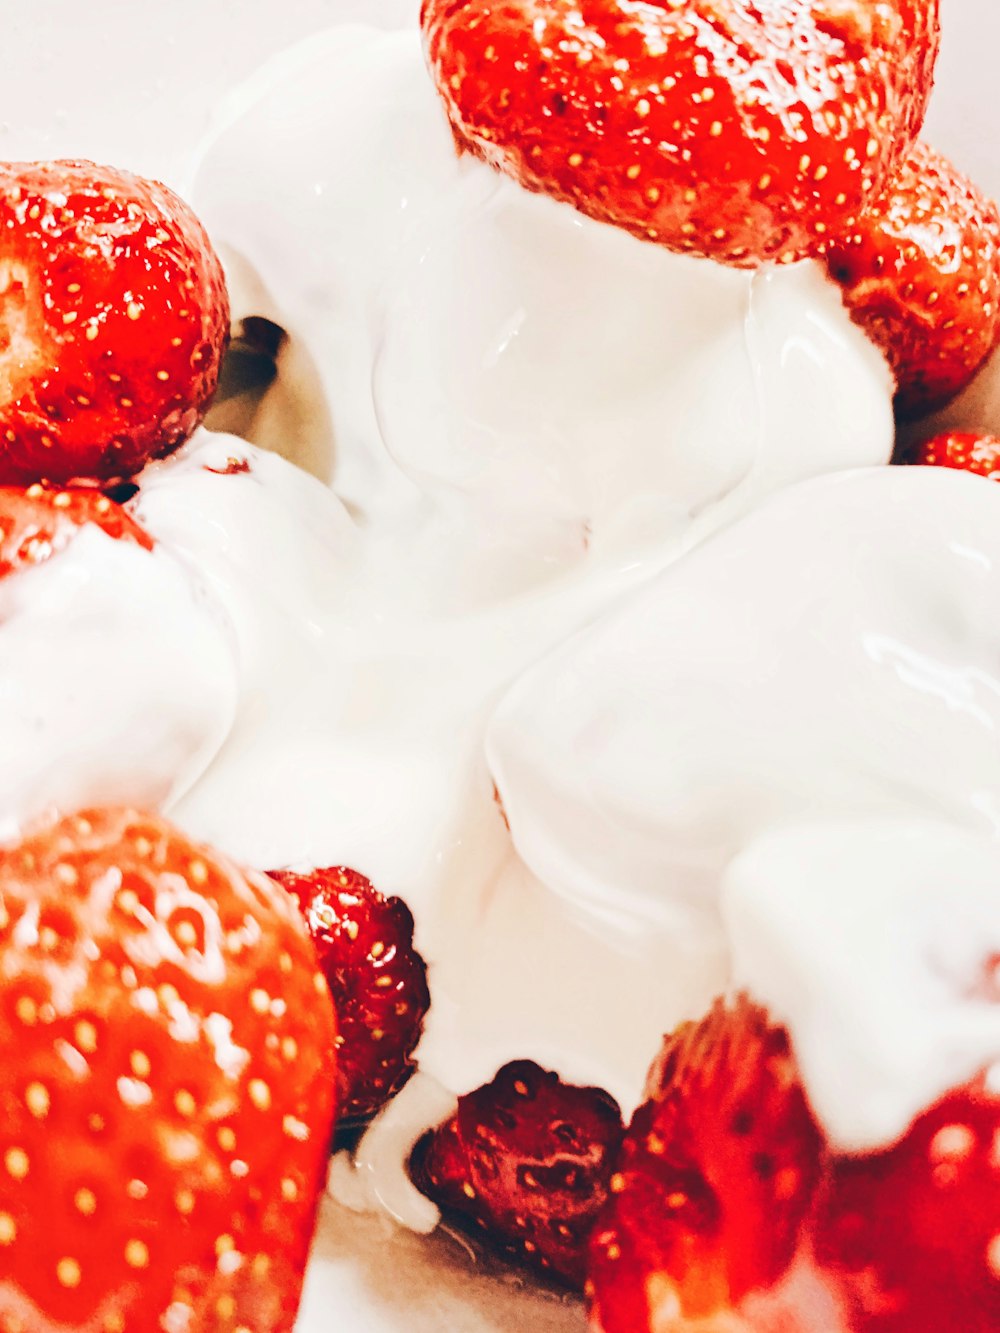 selective focus photo of strawberries